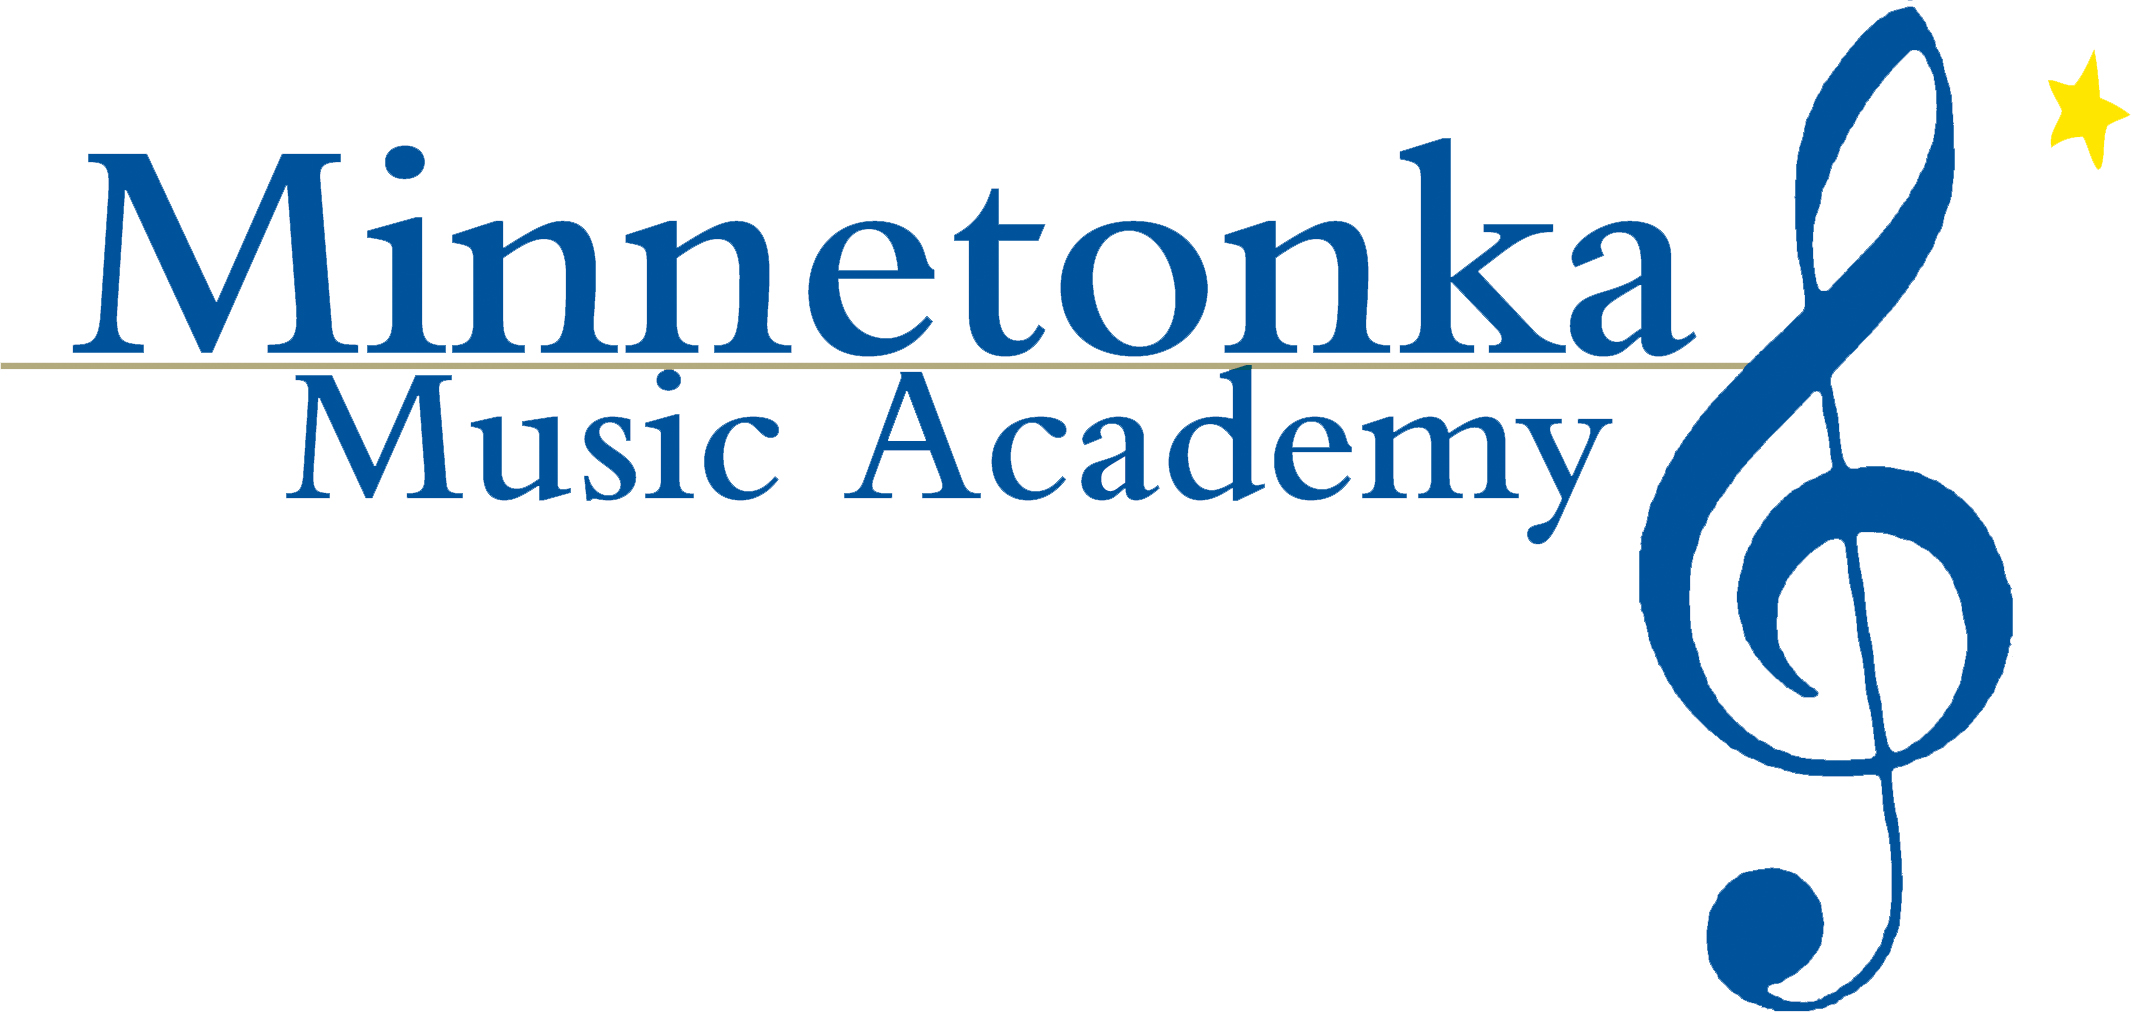 Minetonka Music Academy Logo